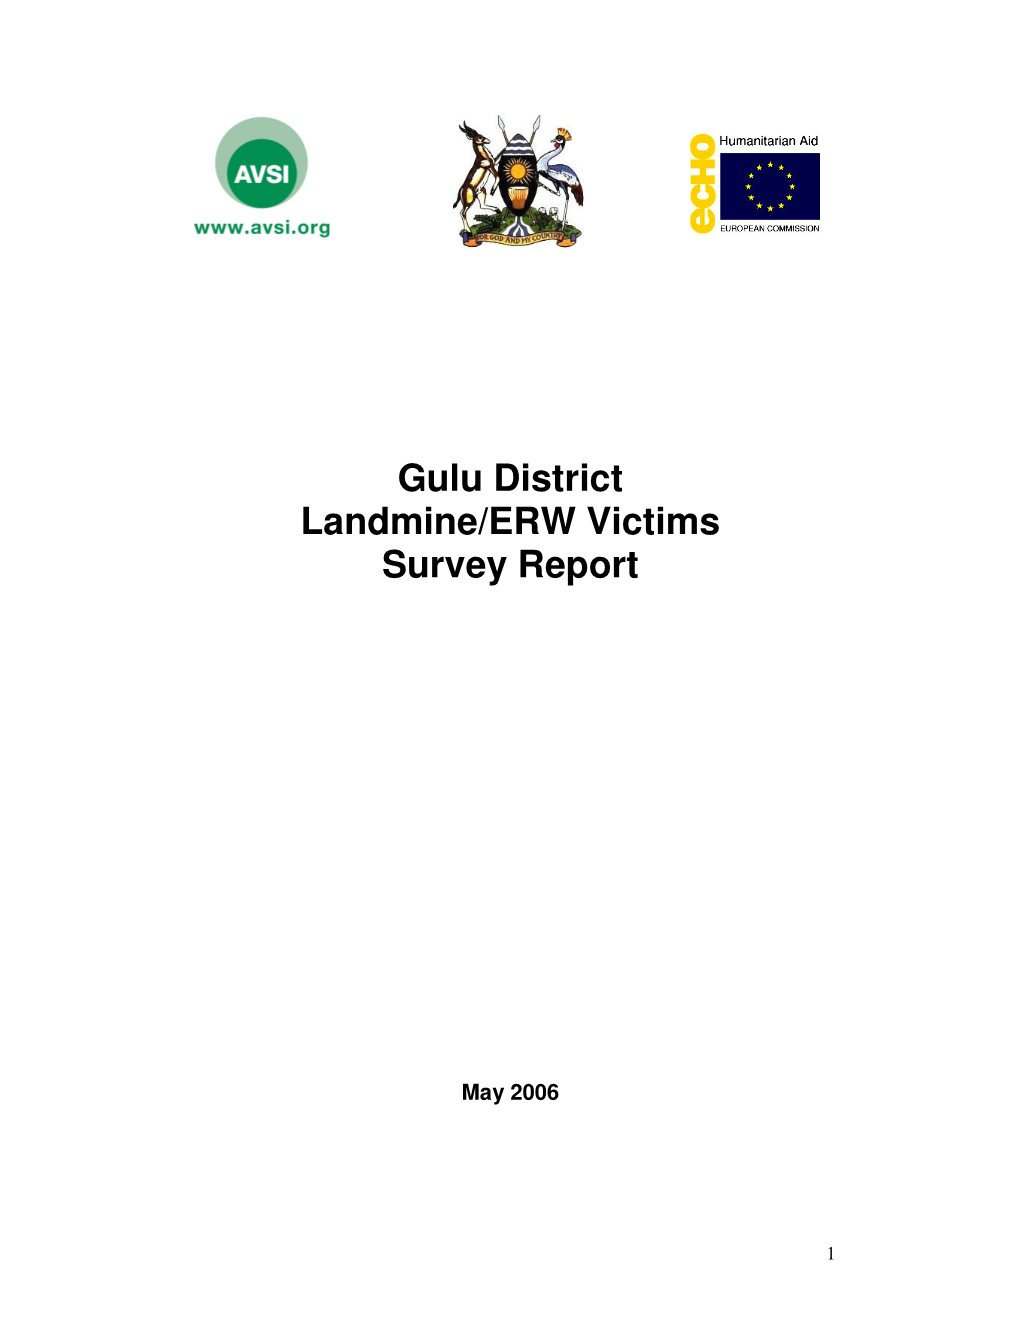 Gulu District Landmine/ERW Victims Survey Report